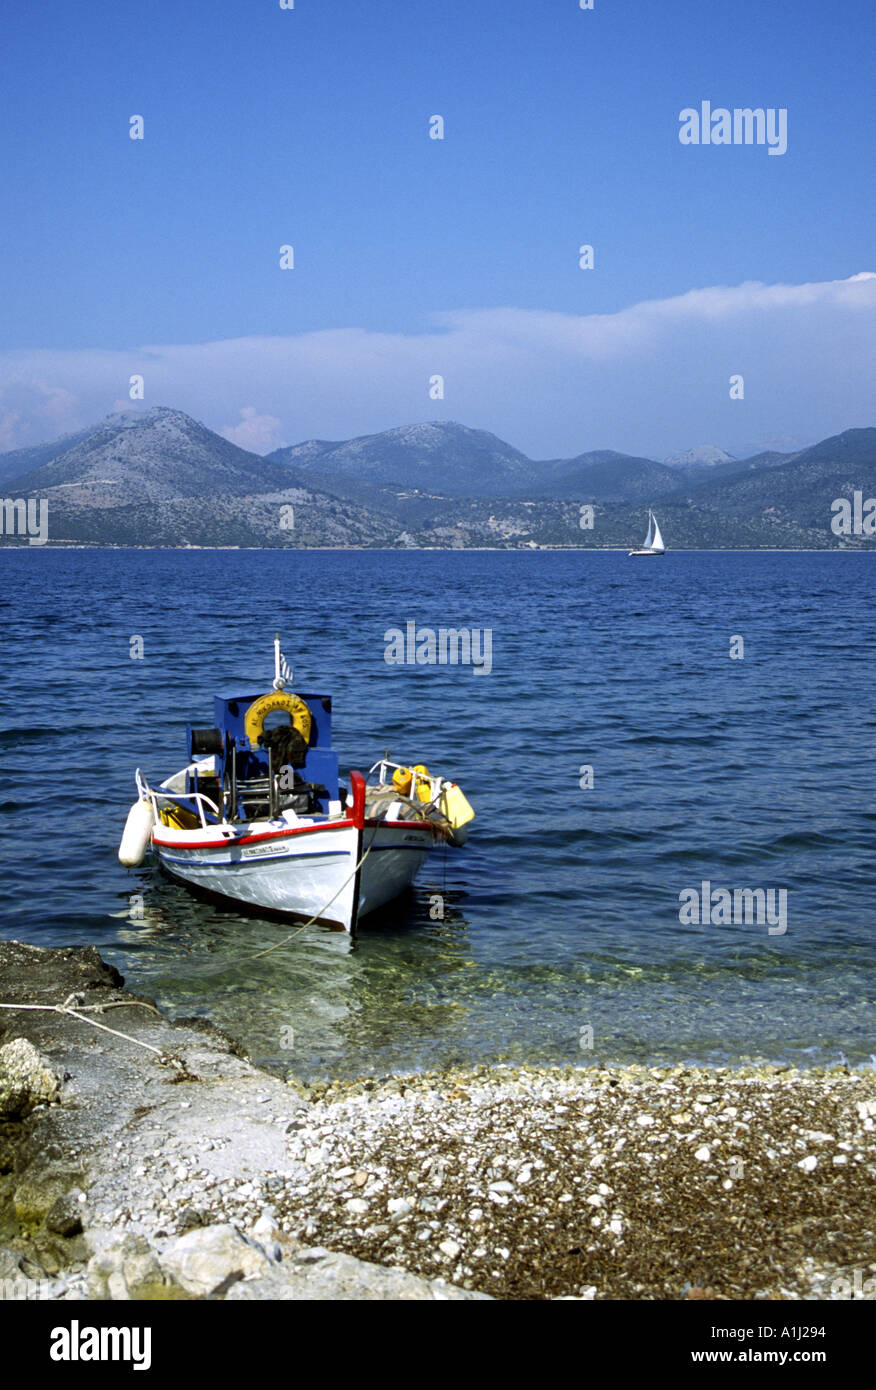 Fishing Boat, Dinghy, Tied Up, Ligia, Nidiri, Lefkarda, Lefkas, Greek Ionian Island, Greece, E.U. European Union, Europe. Stock Photo